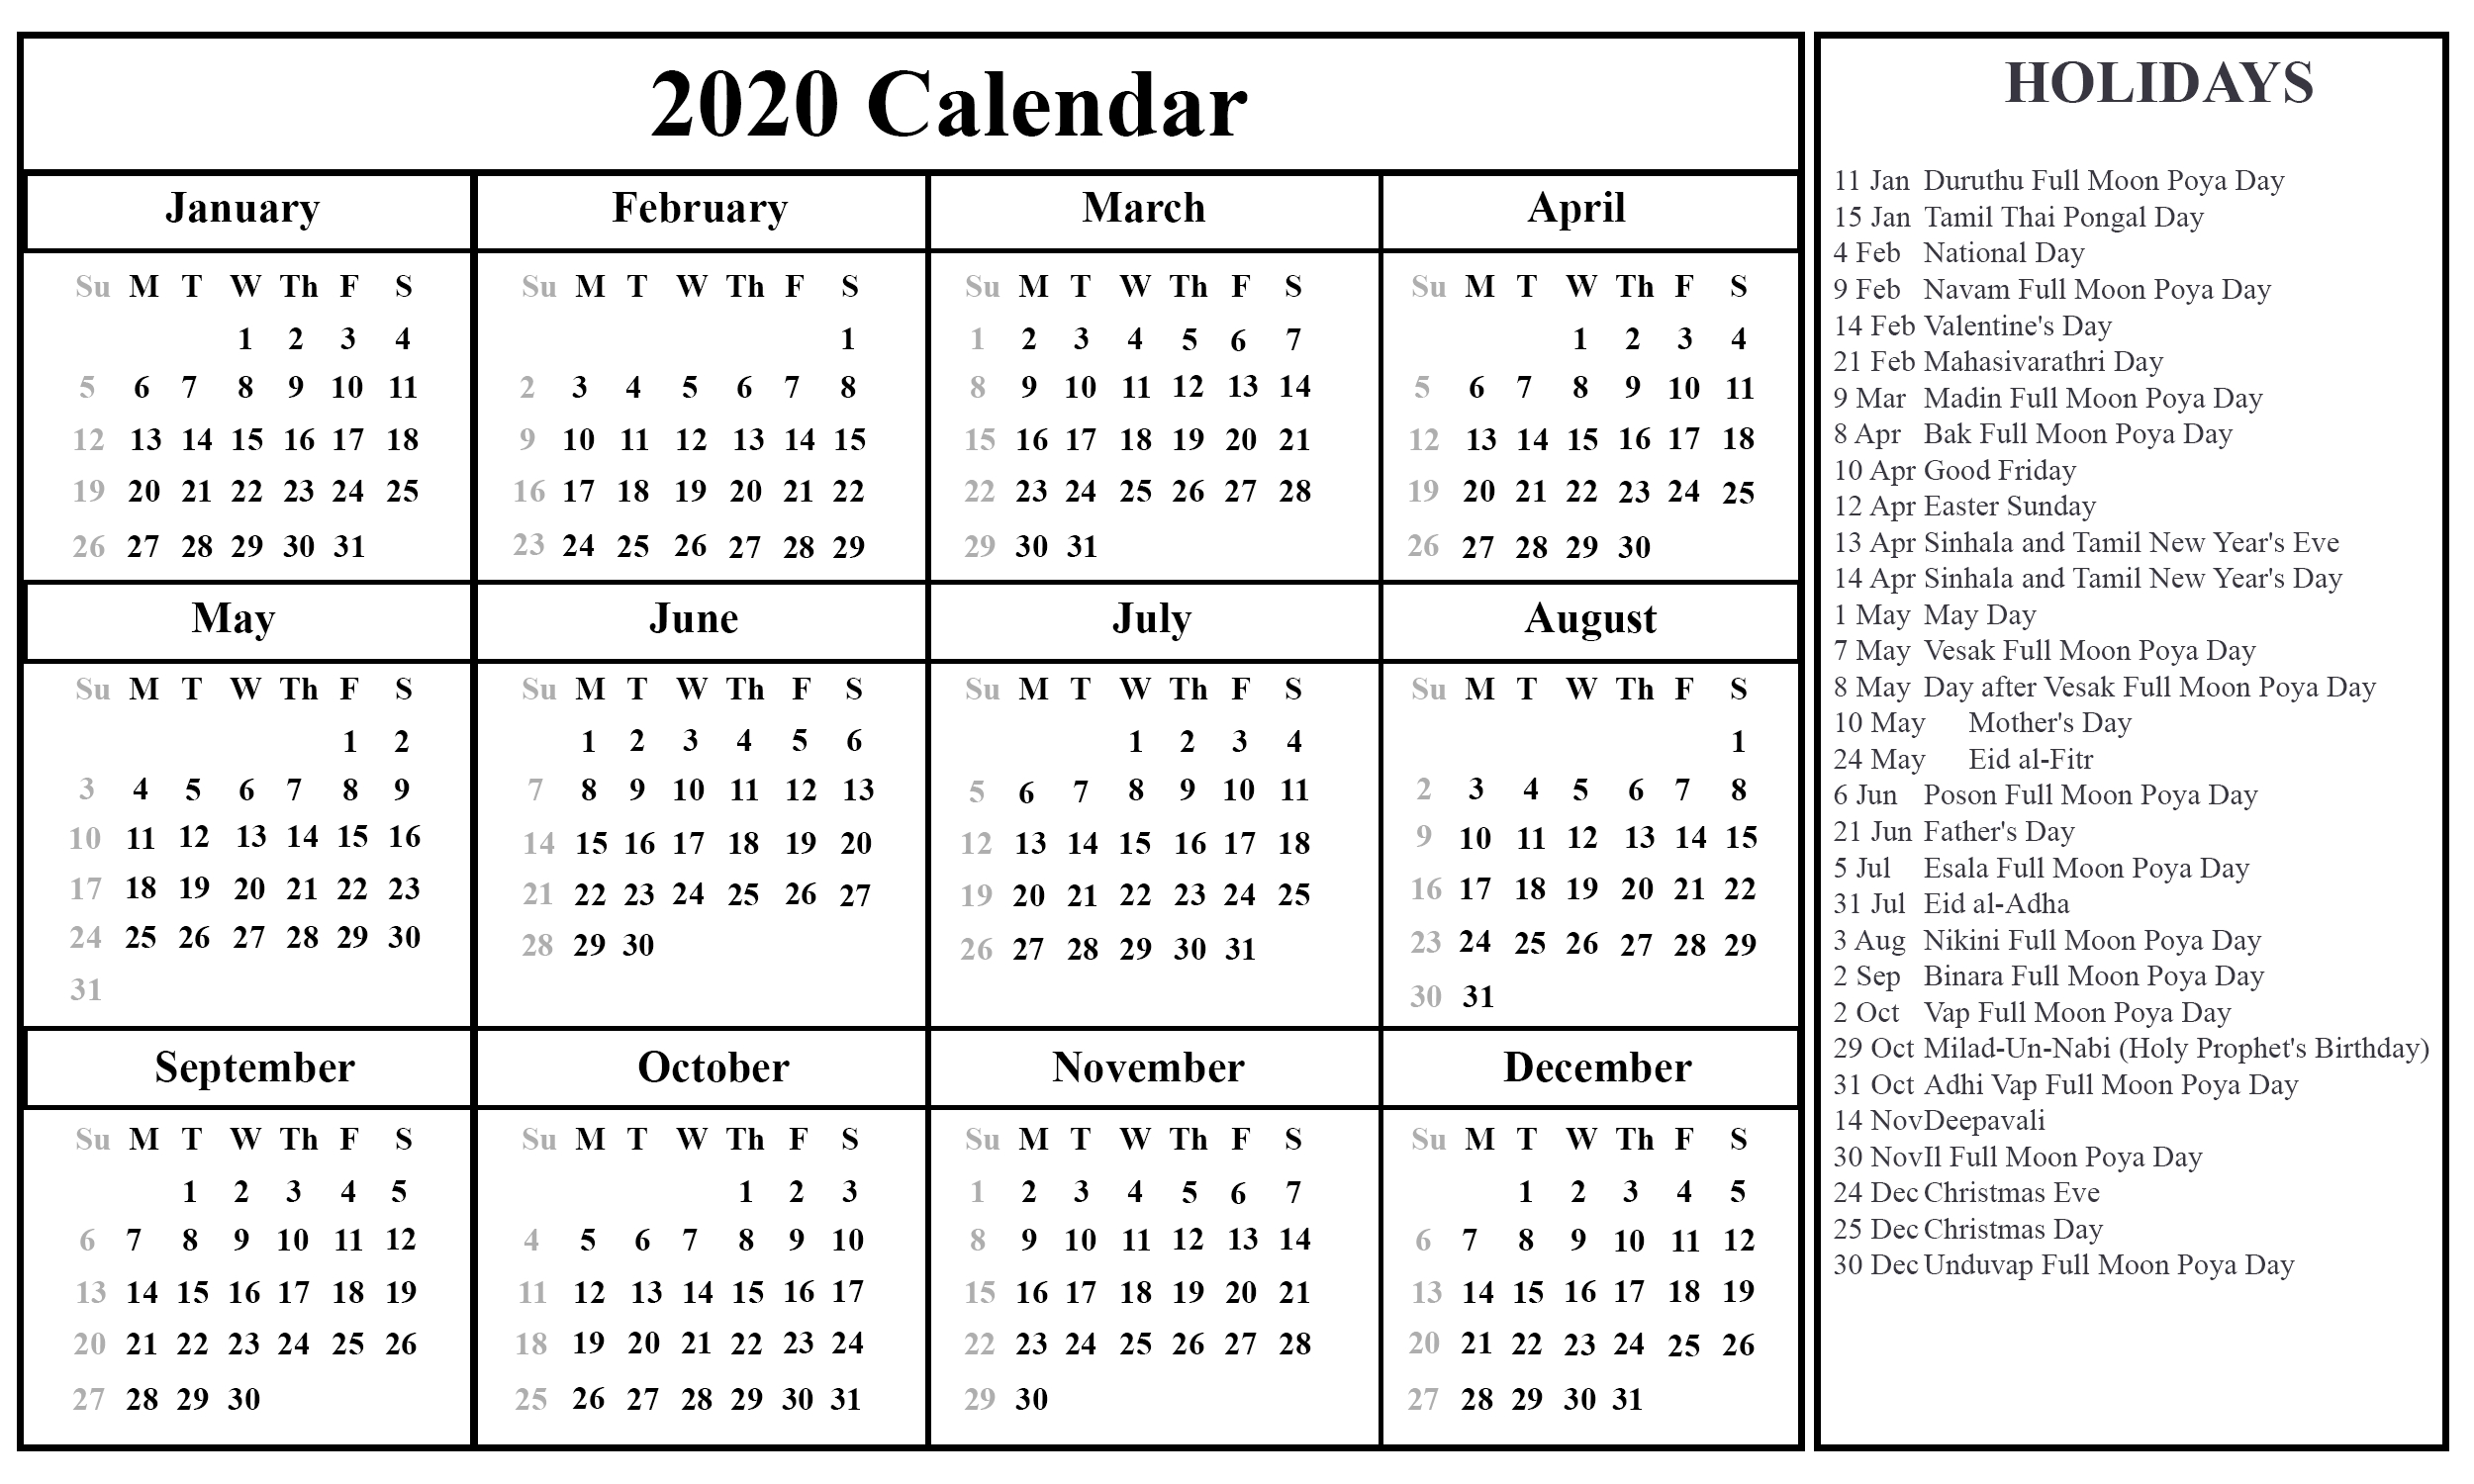 Free Printable Sri Lanka Calendar 2020 With Holidays In Pdf-January 2020 Calendar Sri Lanka